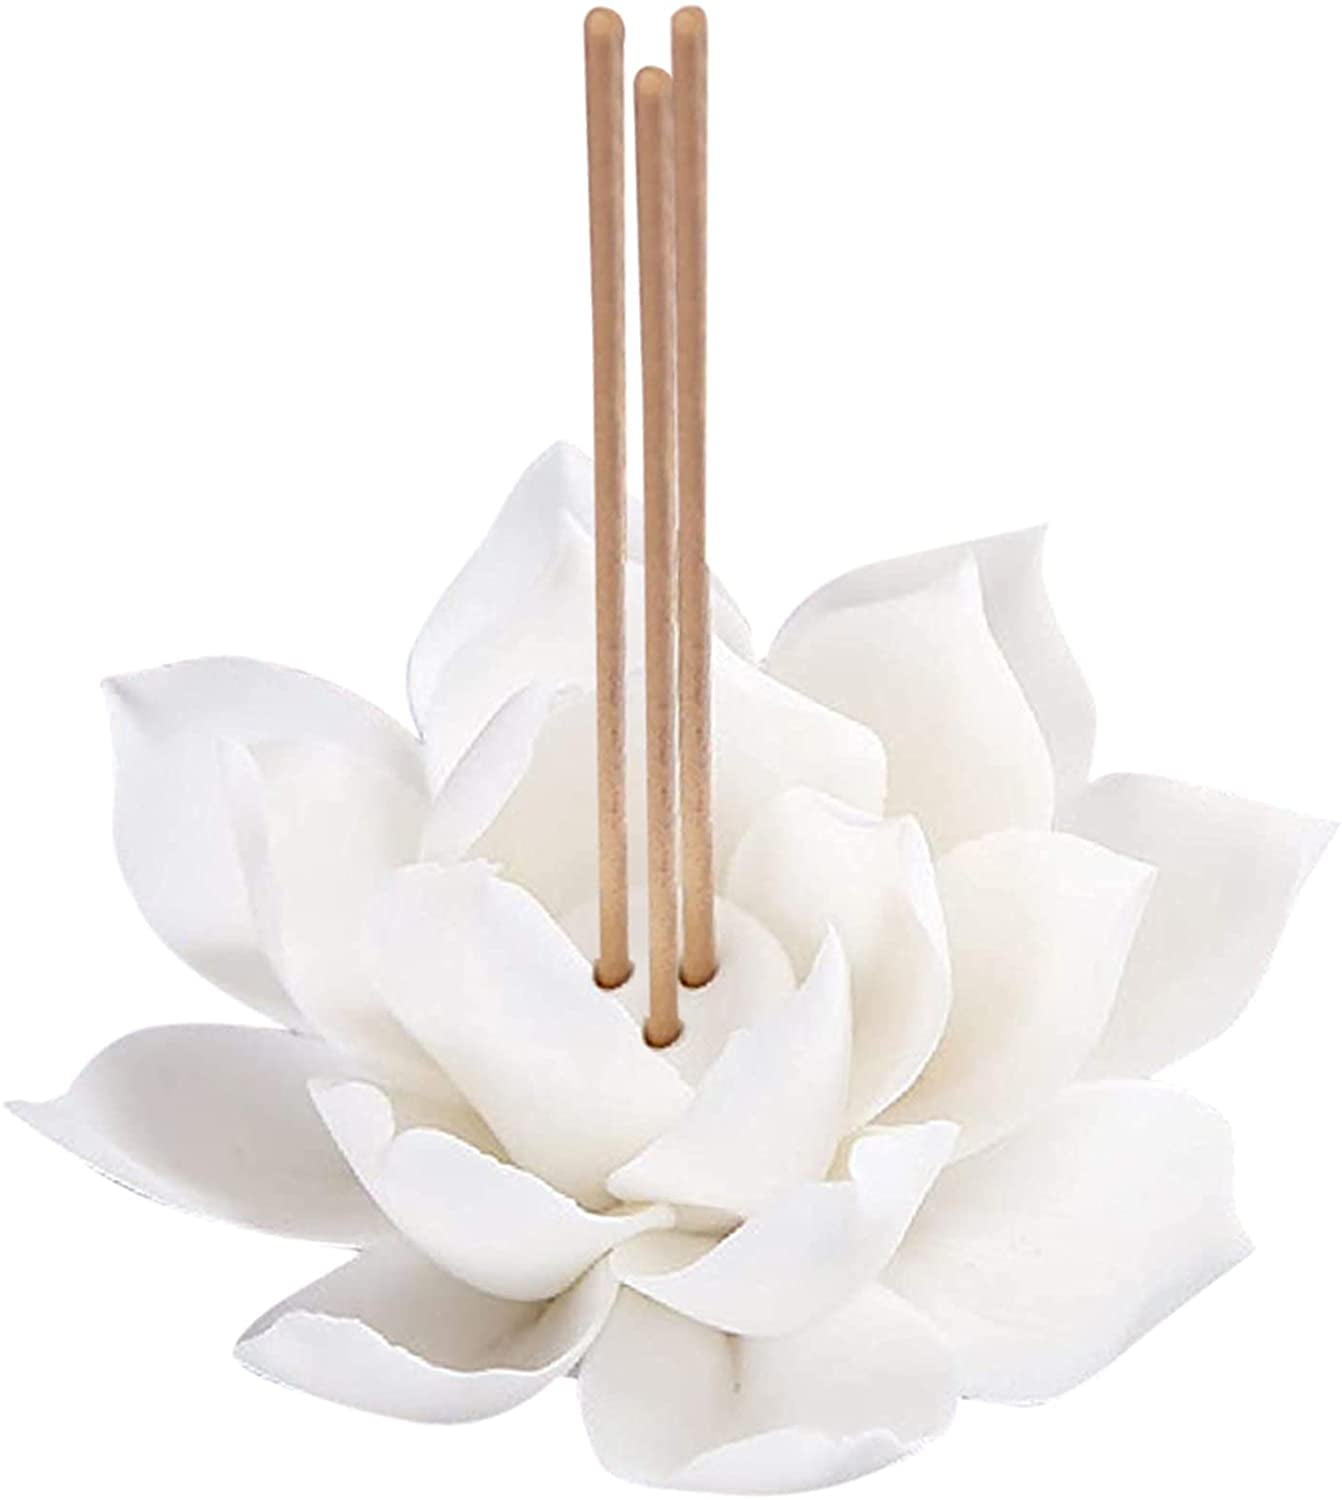 Handmade Ceramic Lotus Incense Holder Sticks Buddhist Burner Ash Catcher 3 Holes 